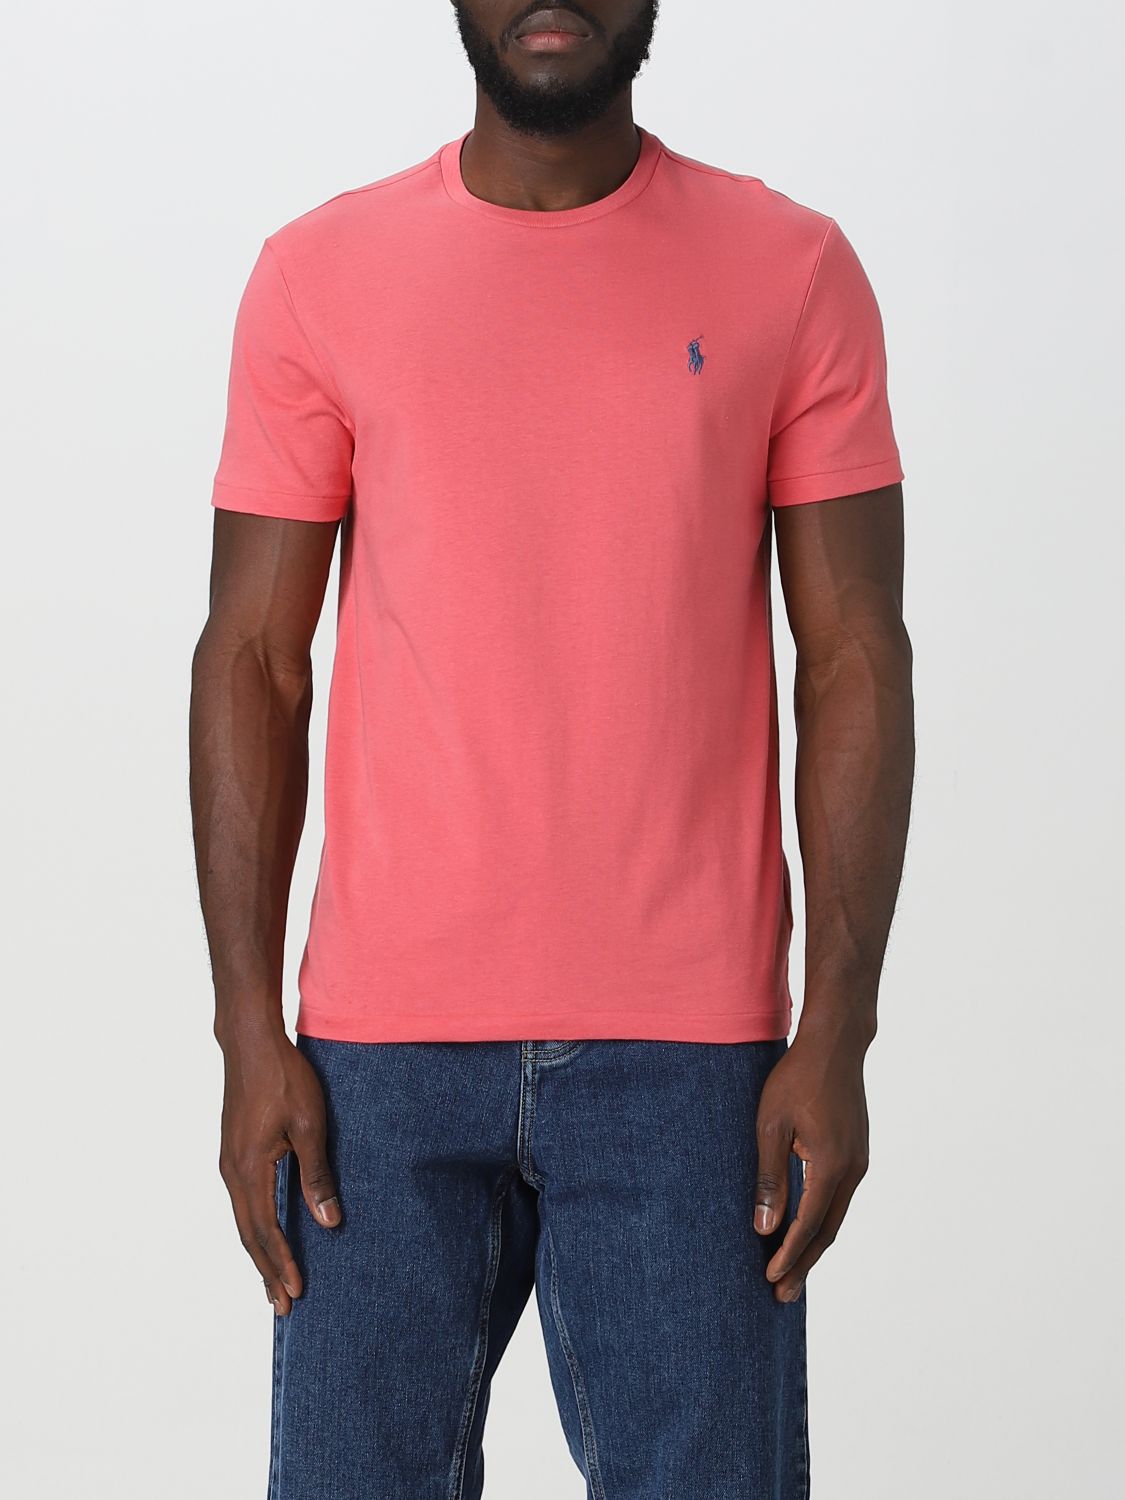 POLO RALPH LAUREN: t-shirt for men - Cherry | Polo Ralph Lauren t-shirt  710671438 online on 